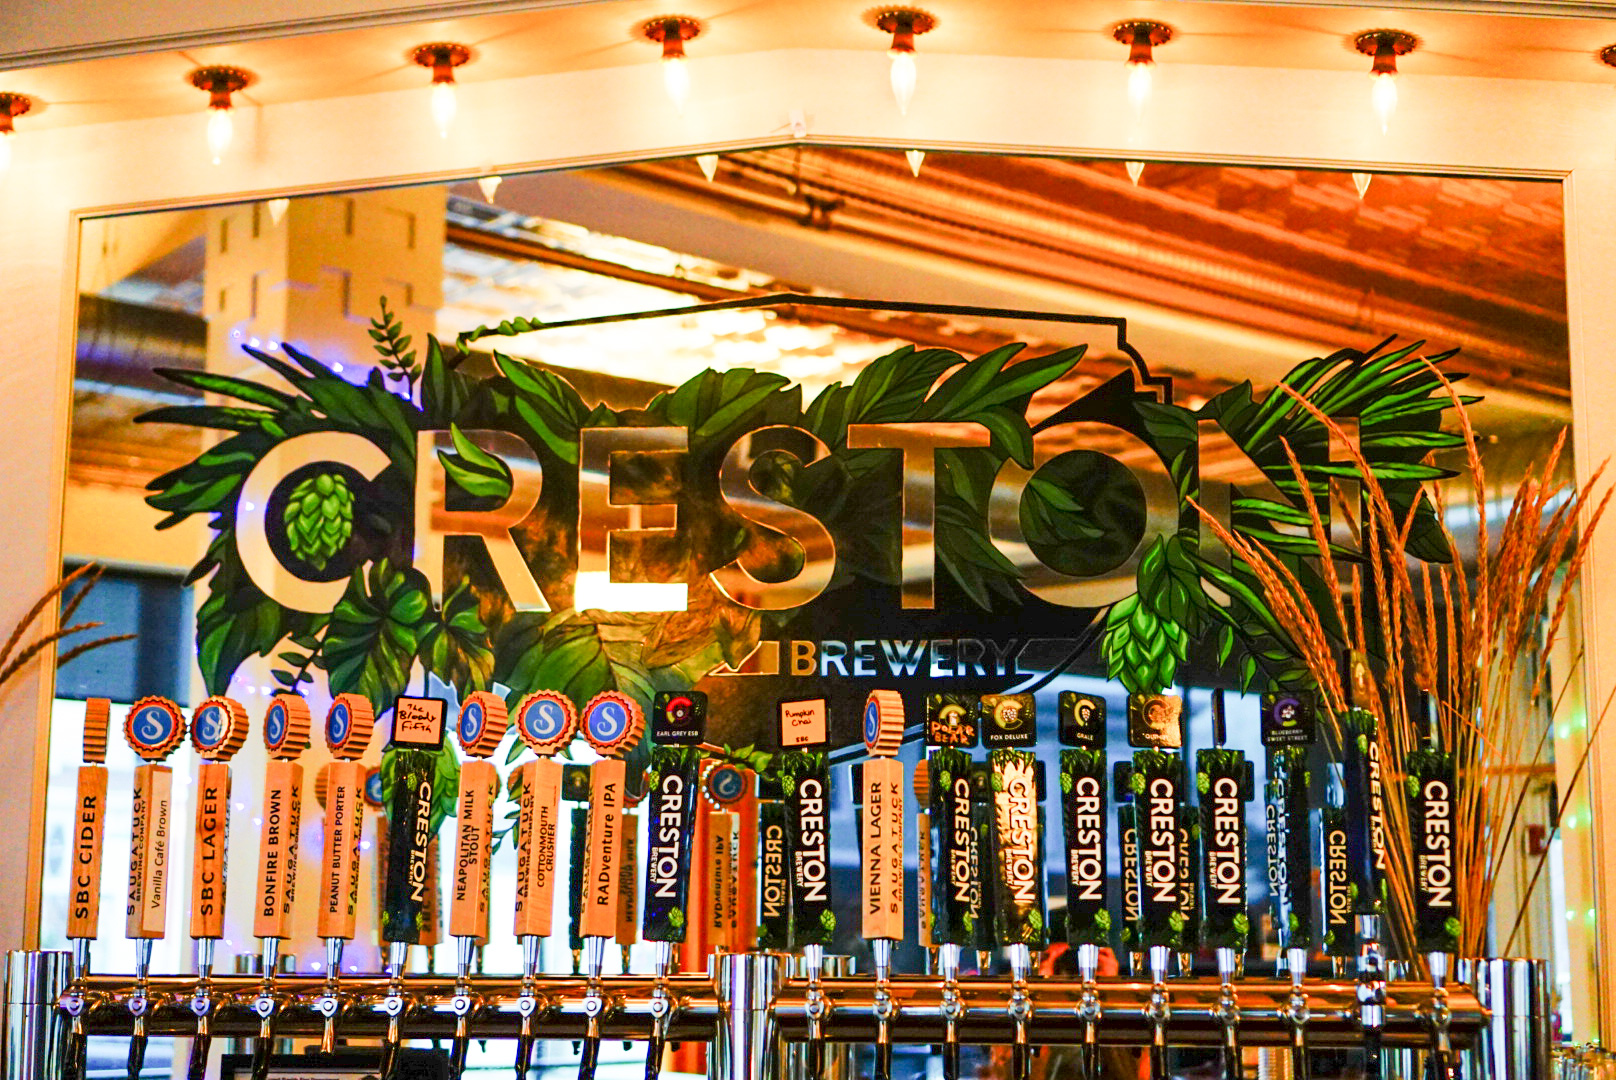 Creston Brewing Company